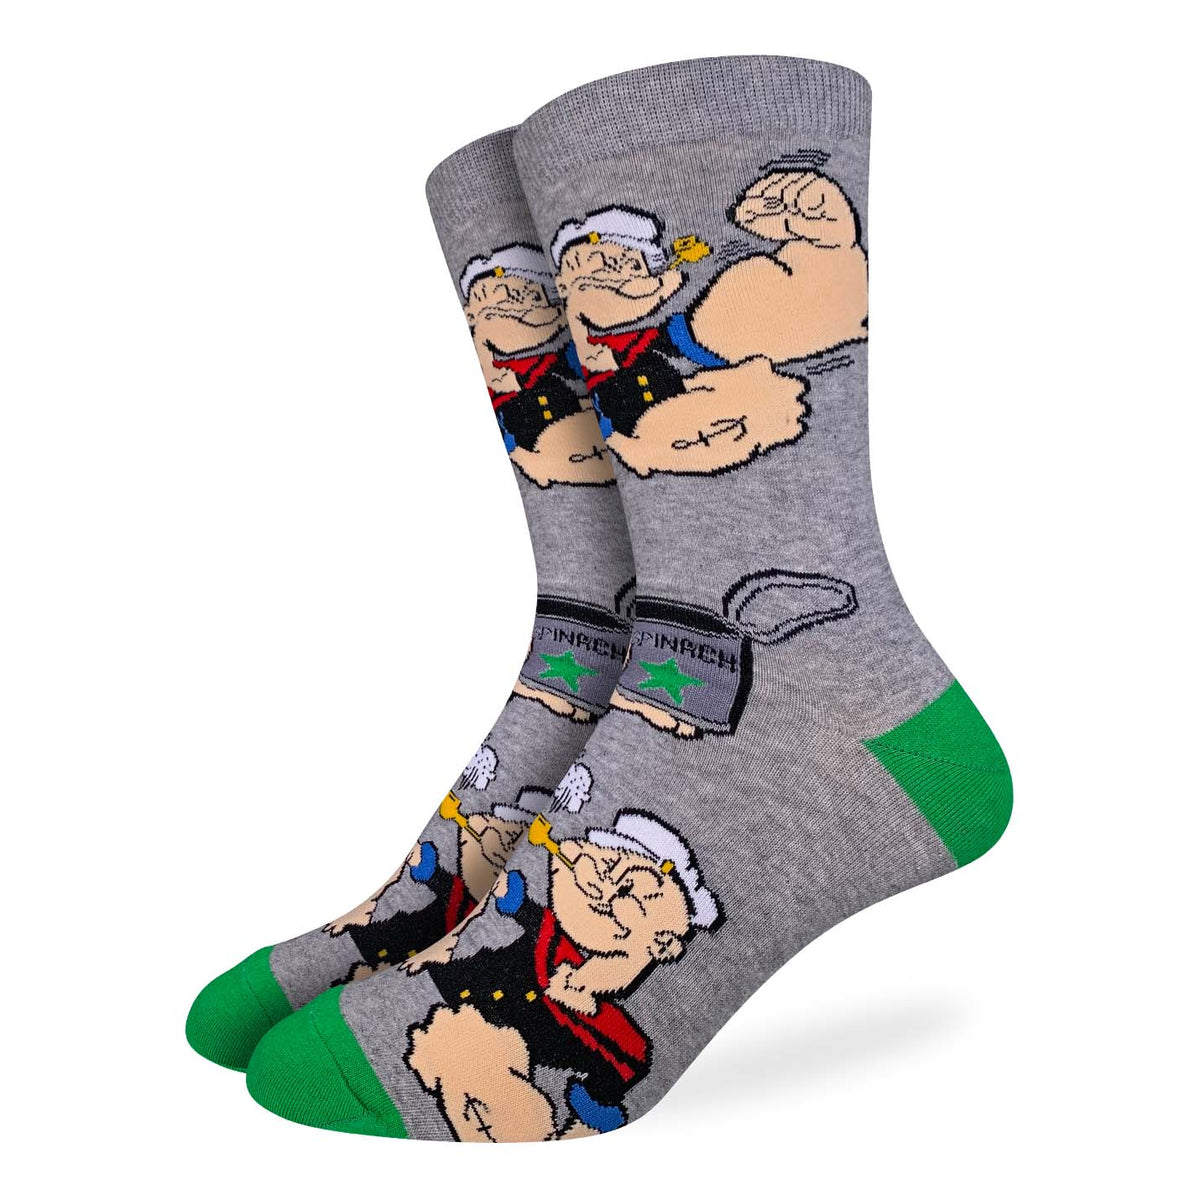 Men's King Size Popeye Flexing Socks